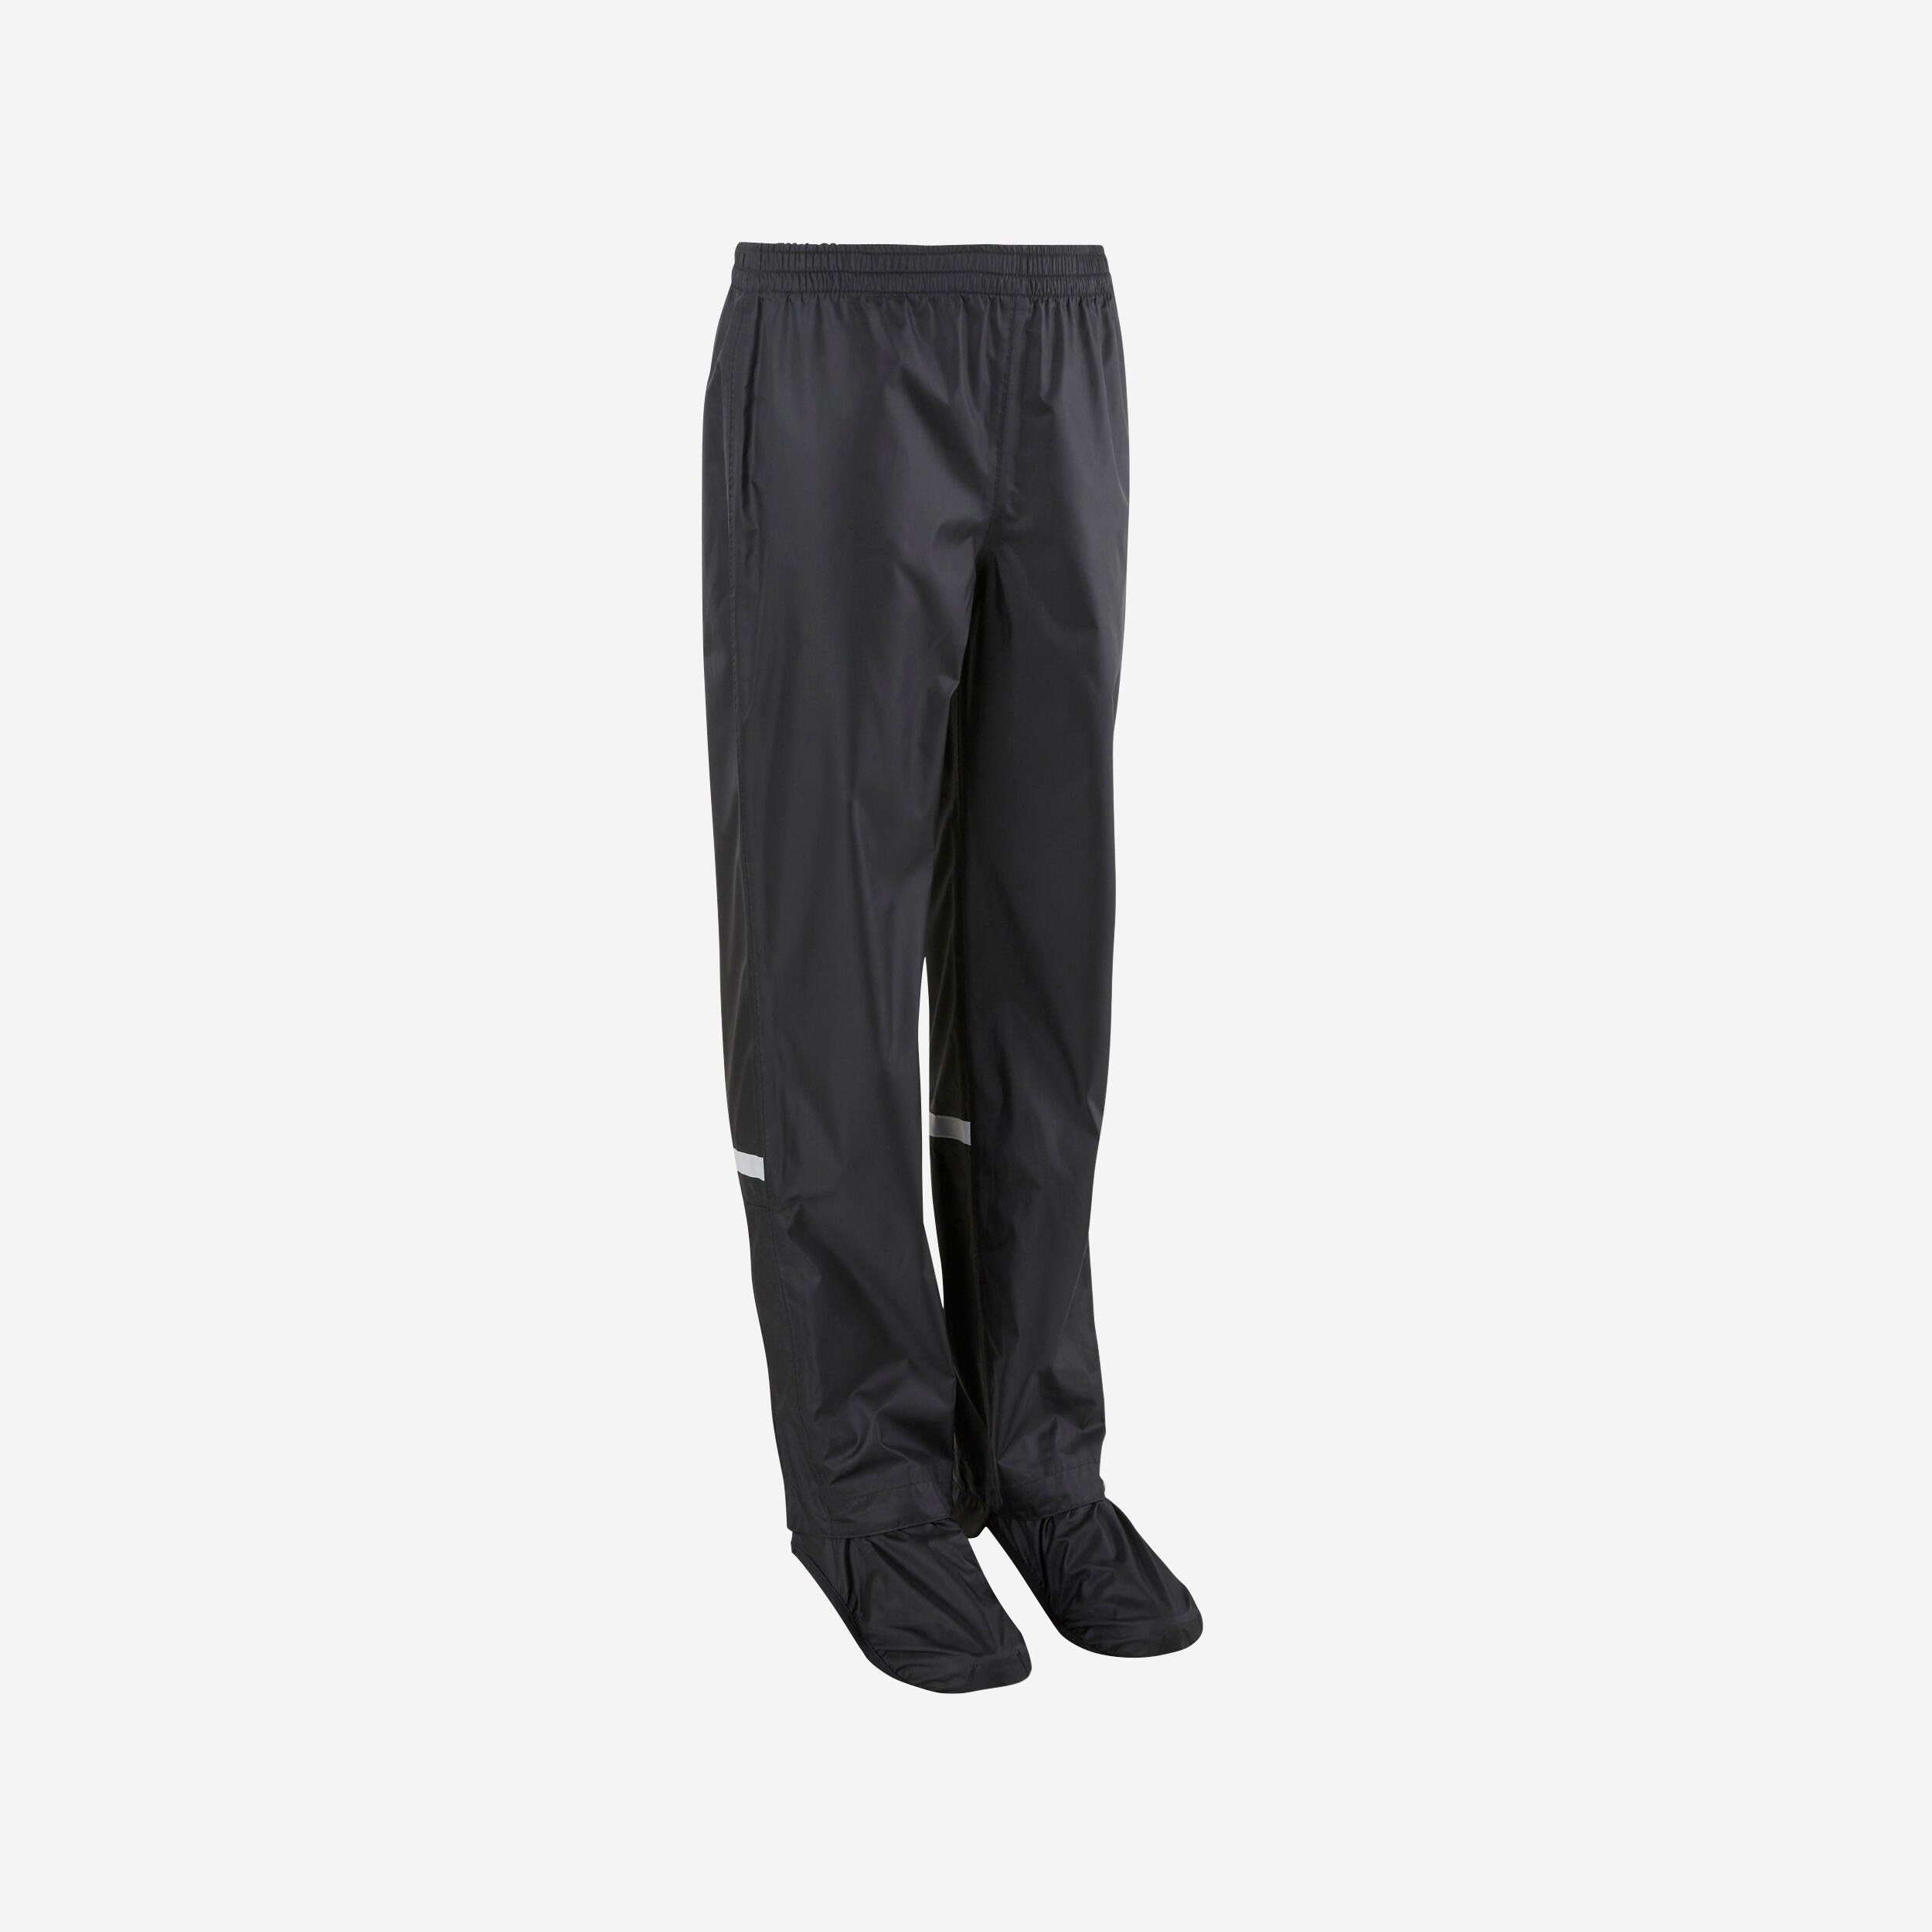 decathlon waterproof trousers